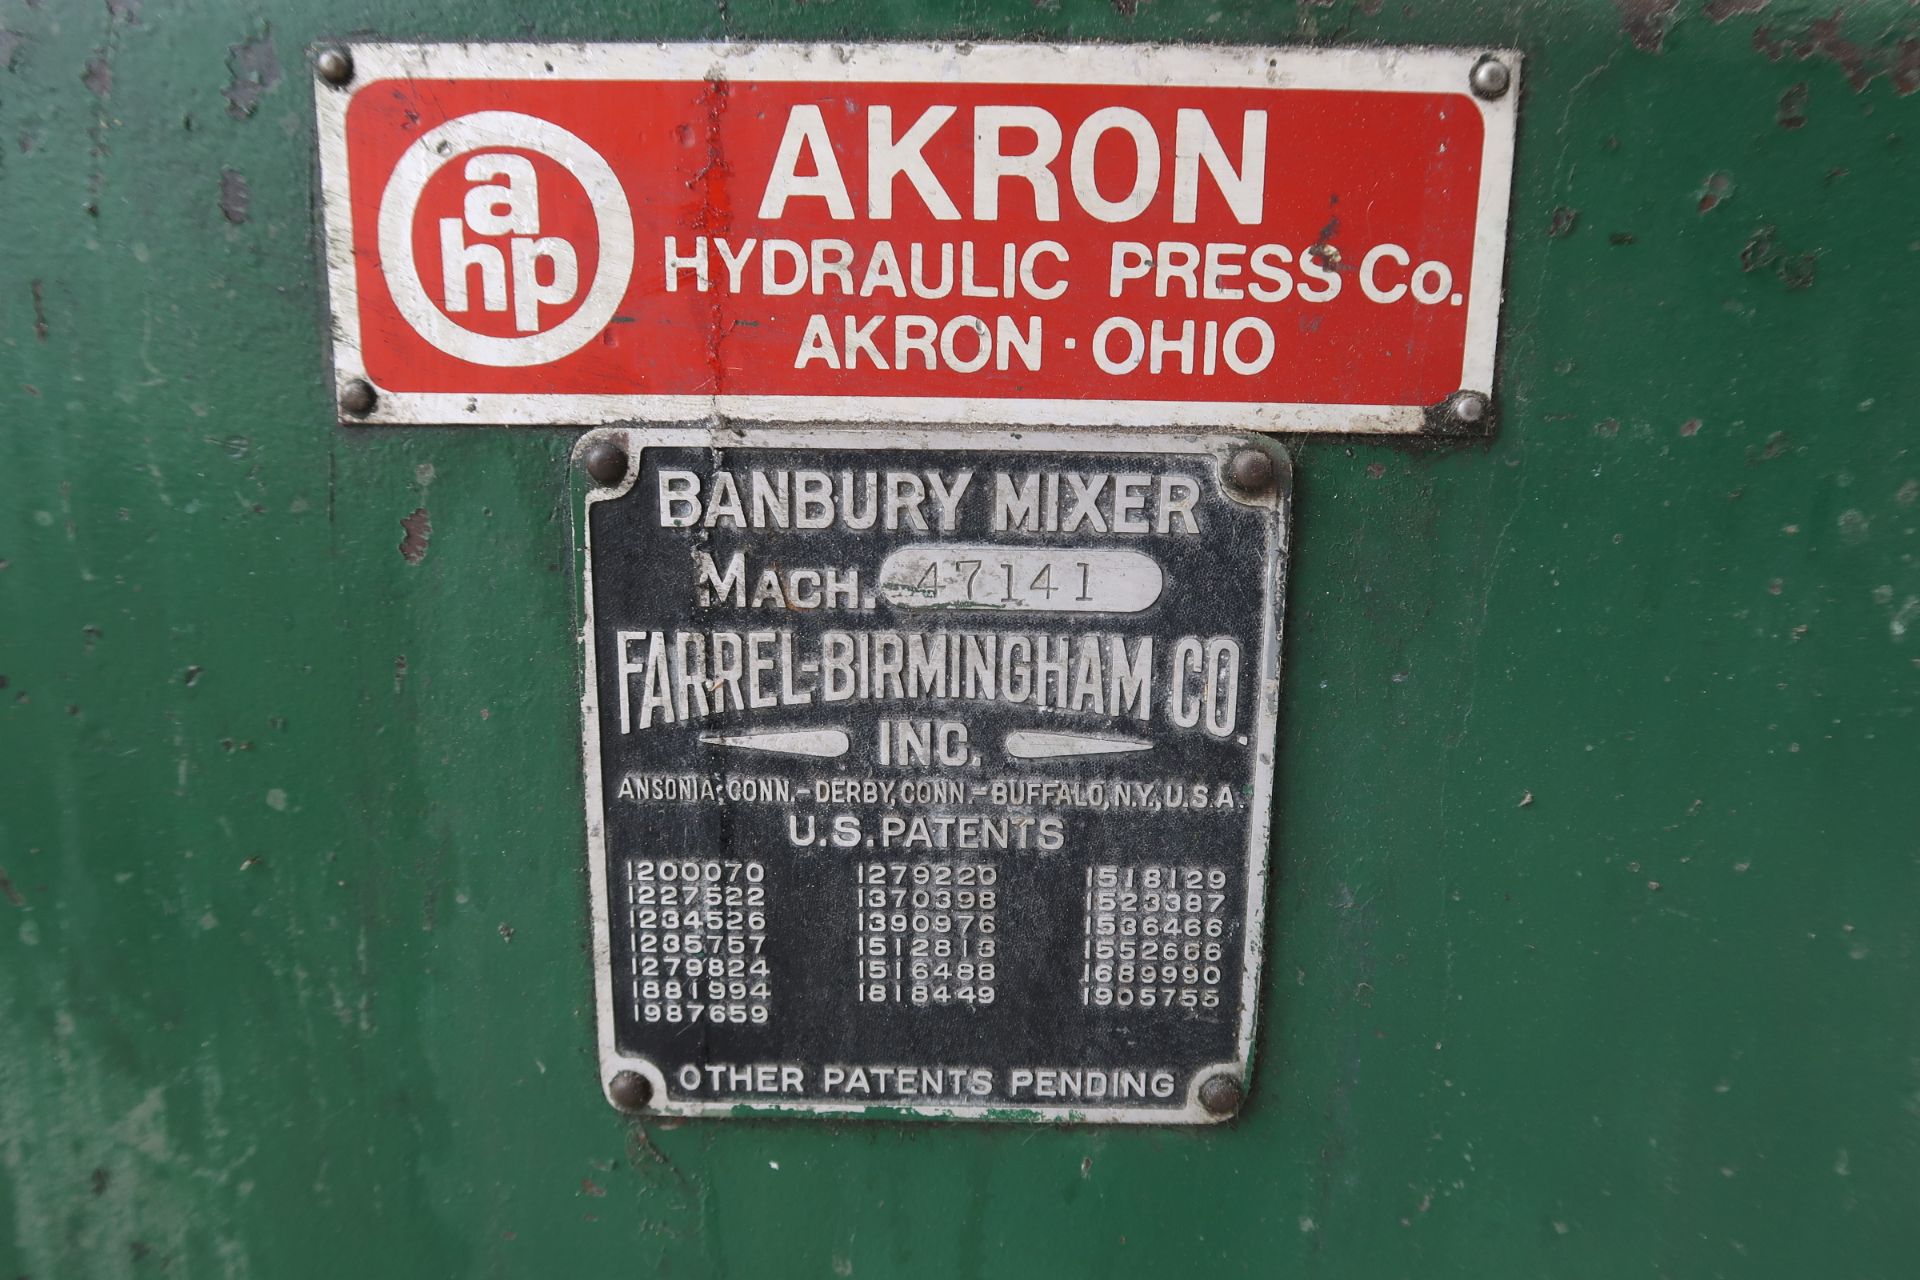 Farrel-Birmingham "Banbury Mixer" Rubber Mixer s/n 47141 (SOLD AS-IS - NO WARRANTY) - Image 8 of 8